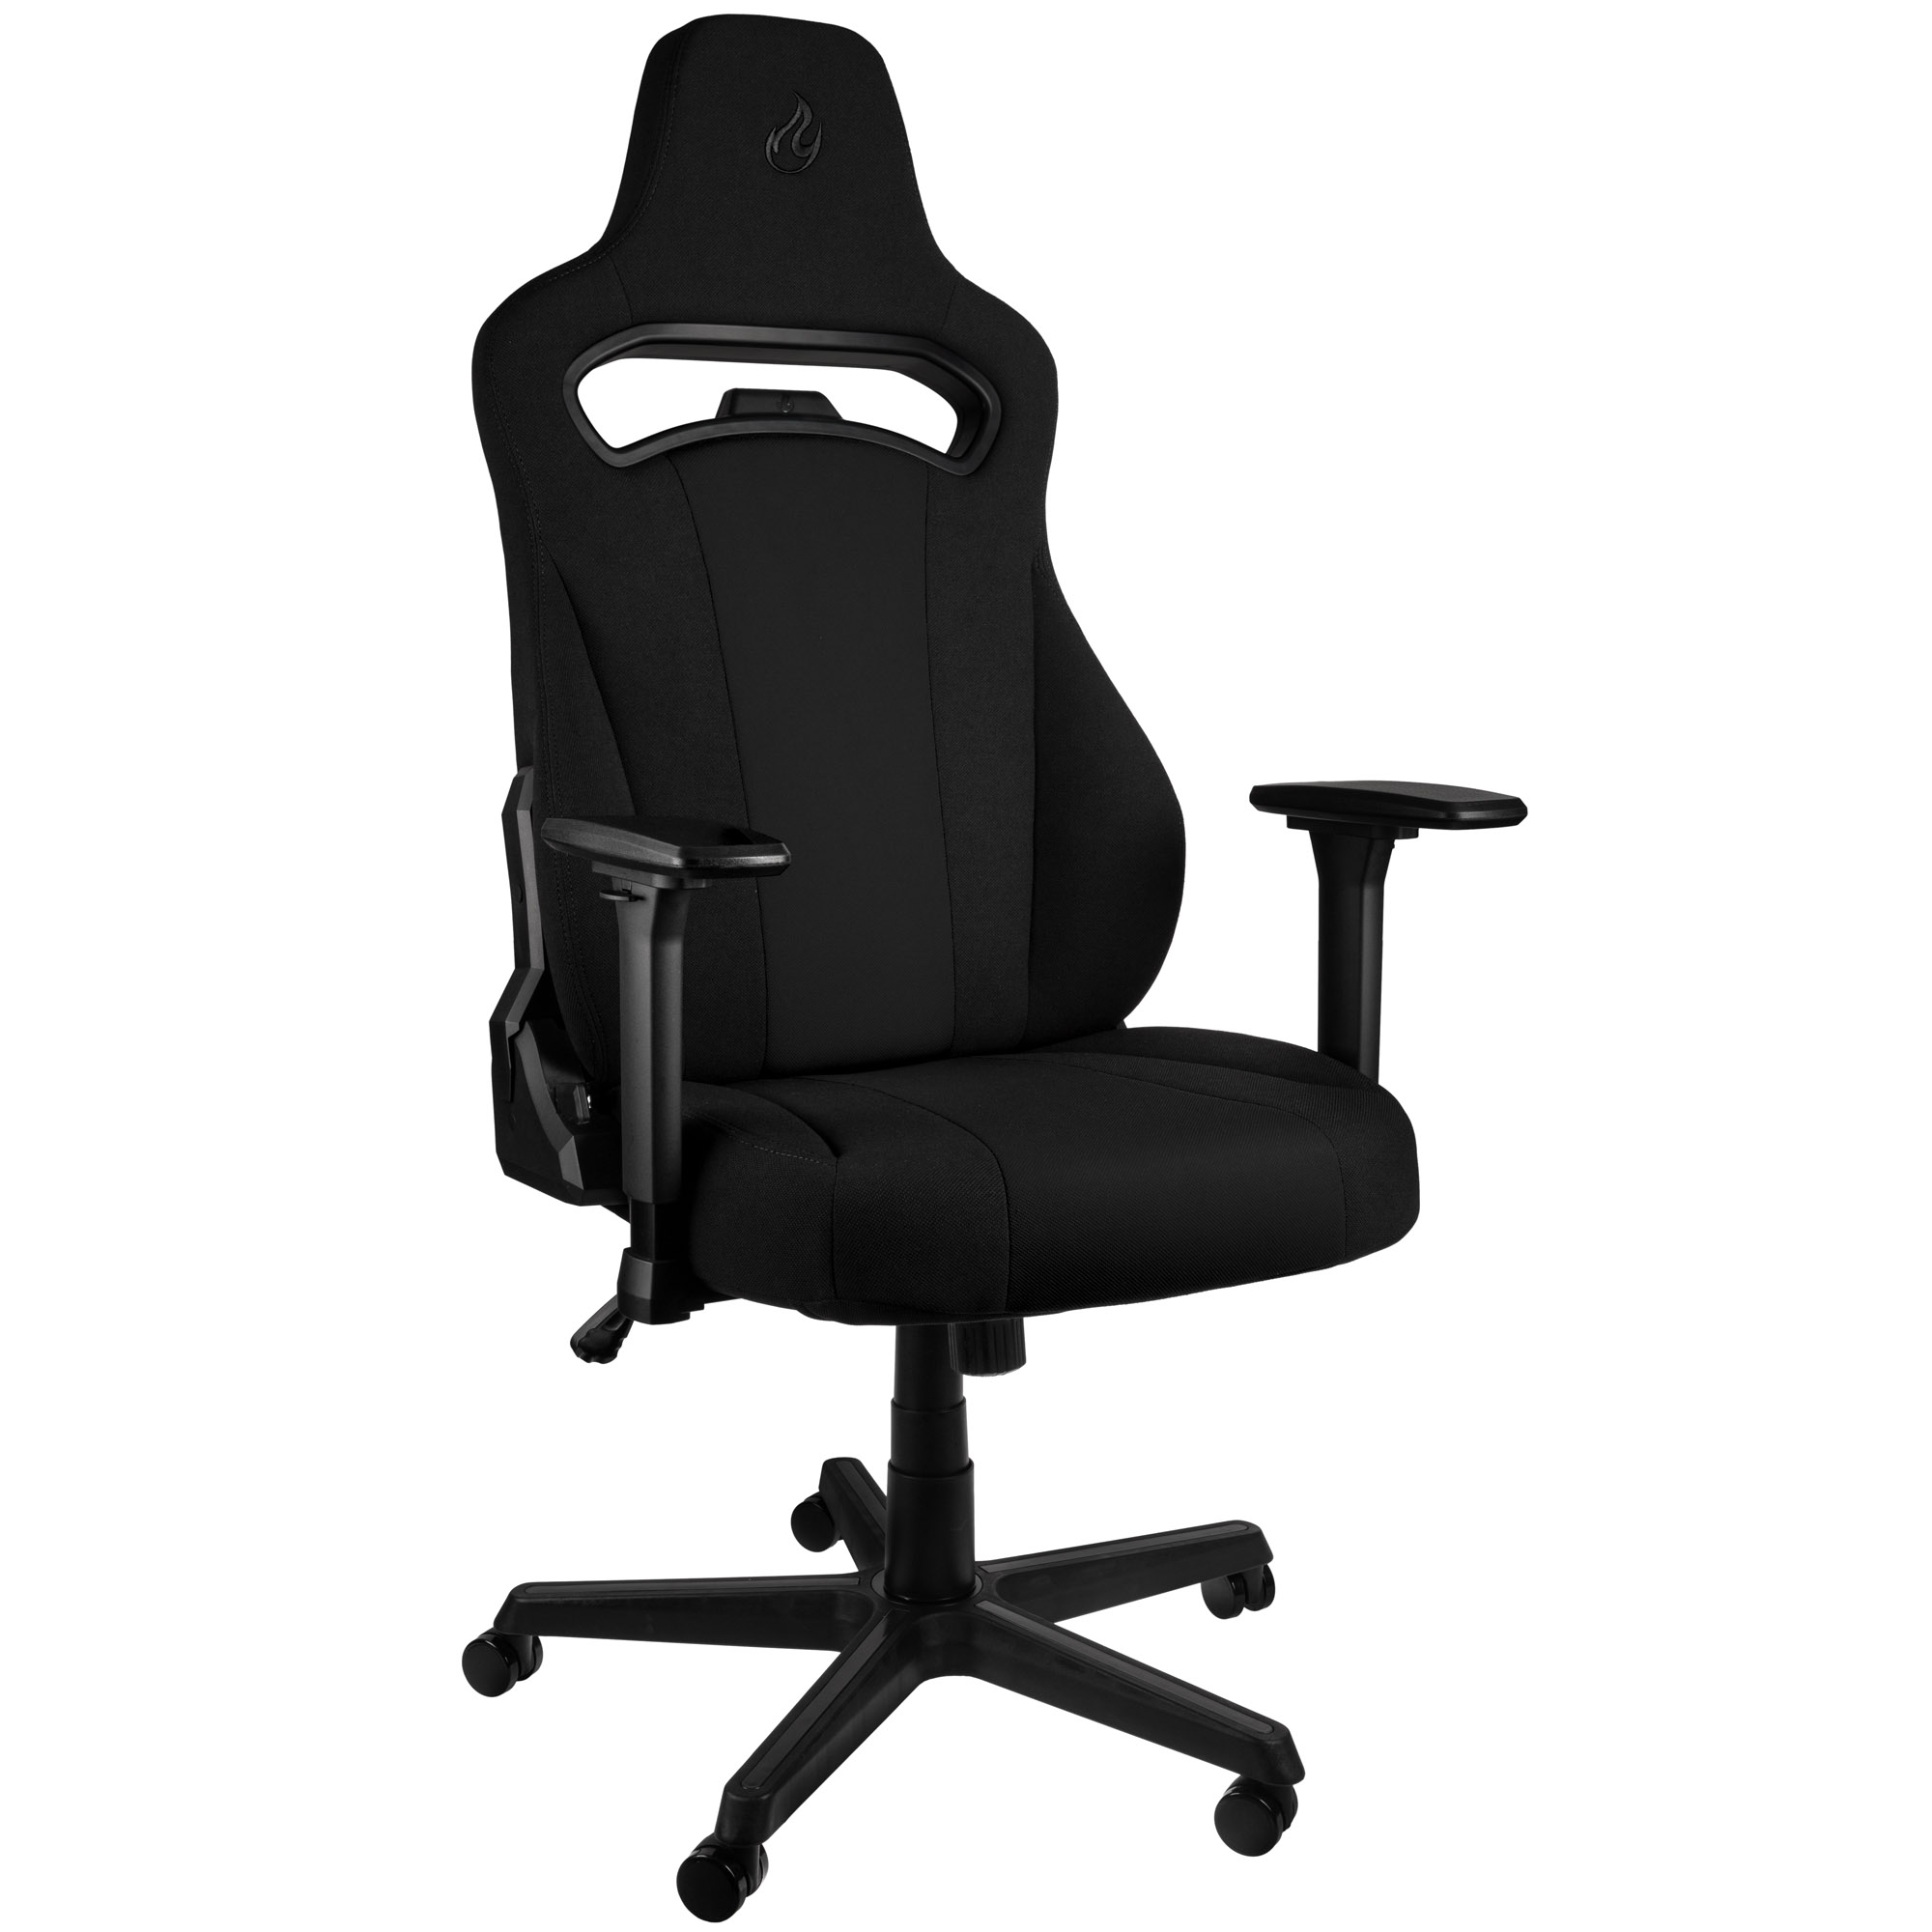  - E250 Gaming Chair Black